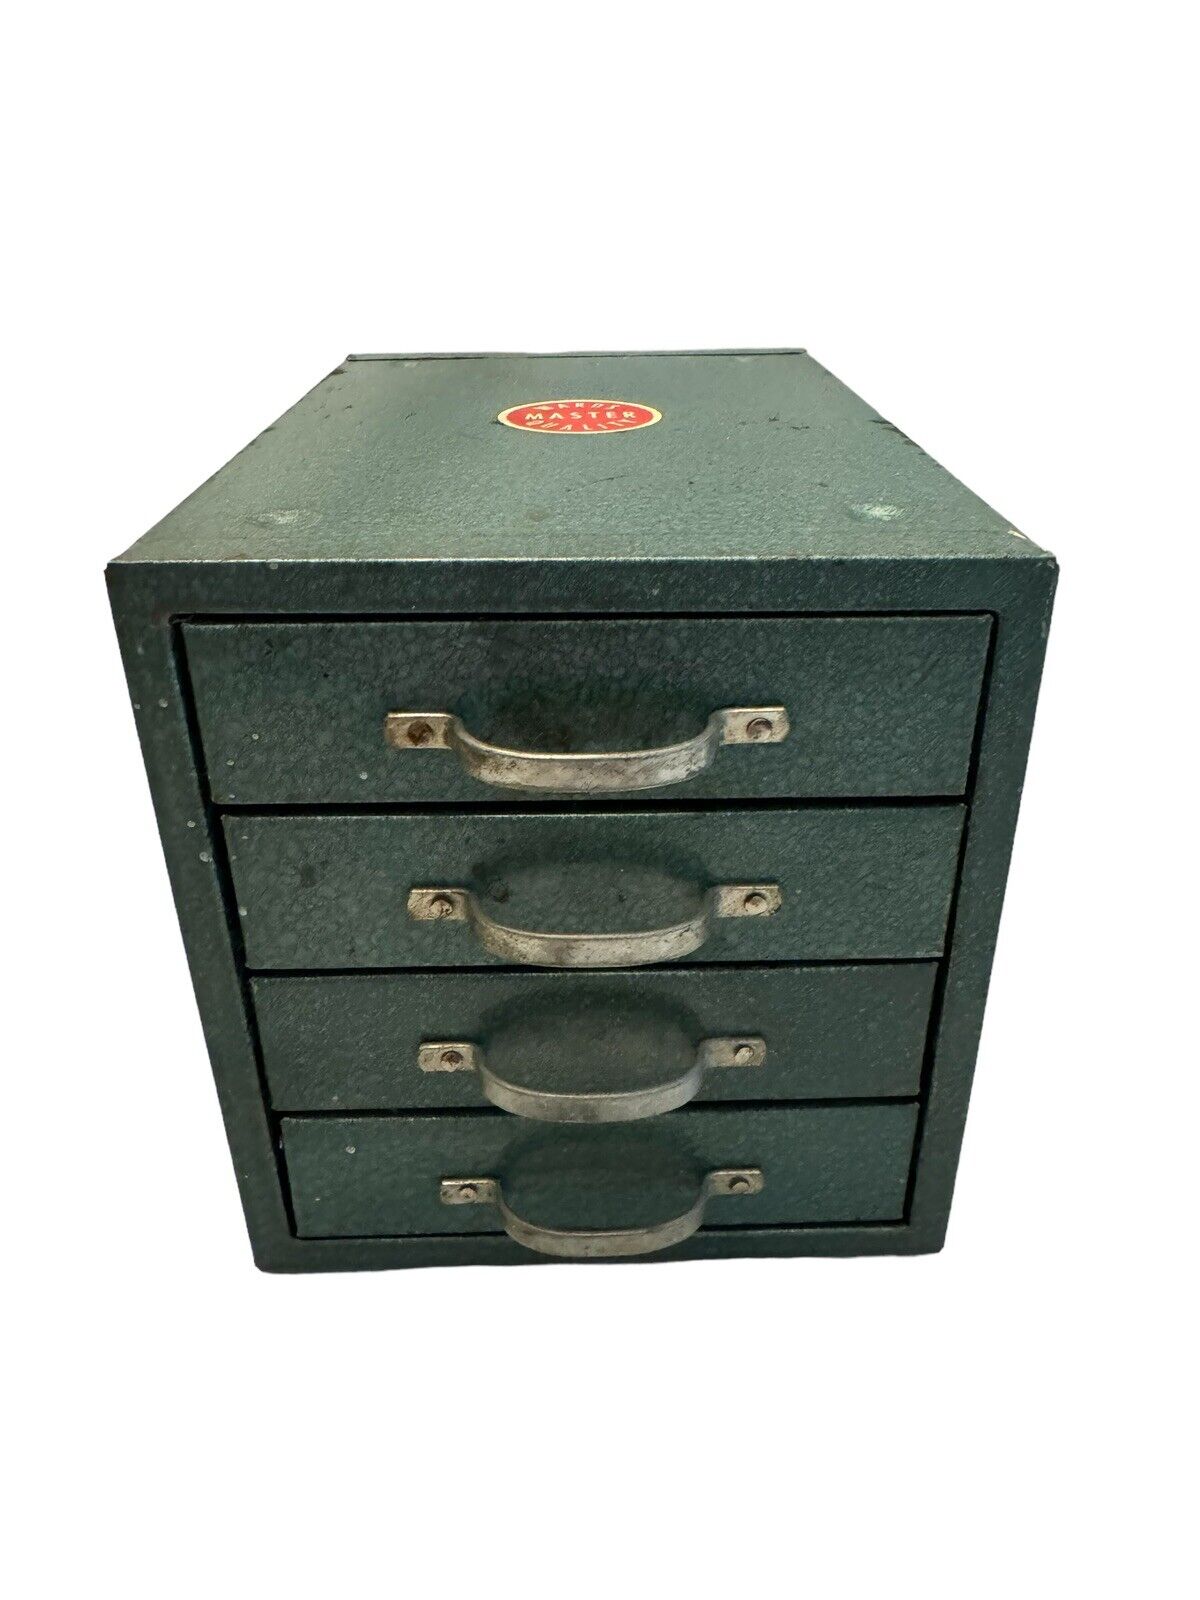 Vintage WARDS Master Quality 4 Drawer Metal Tool Box Small Parts Storage Green